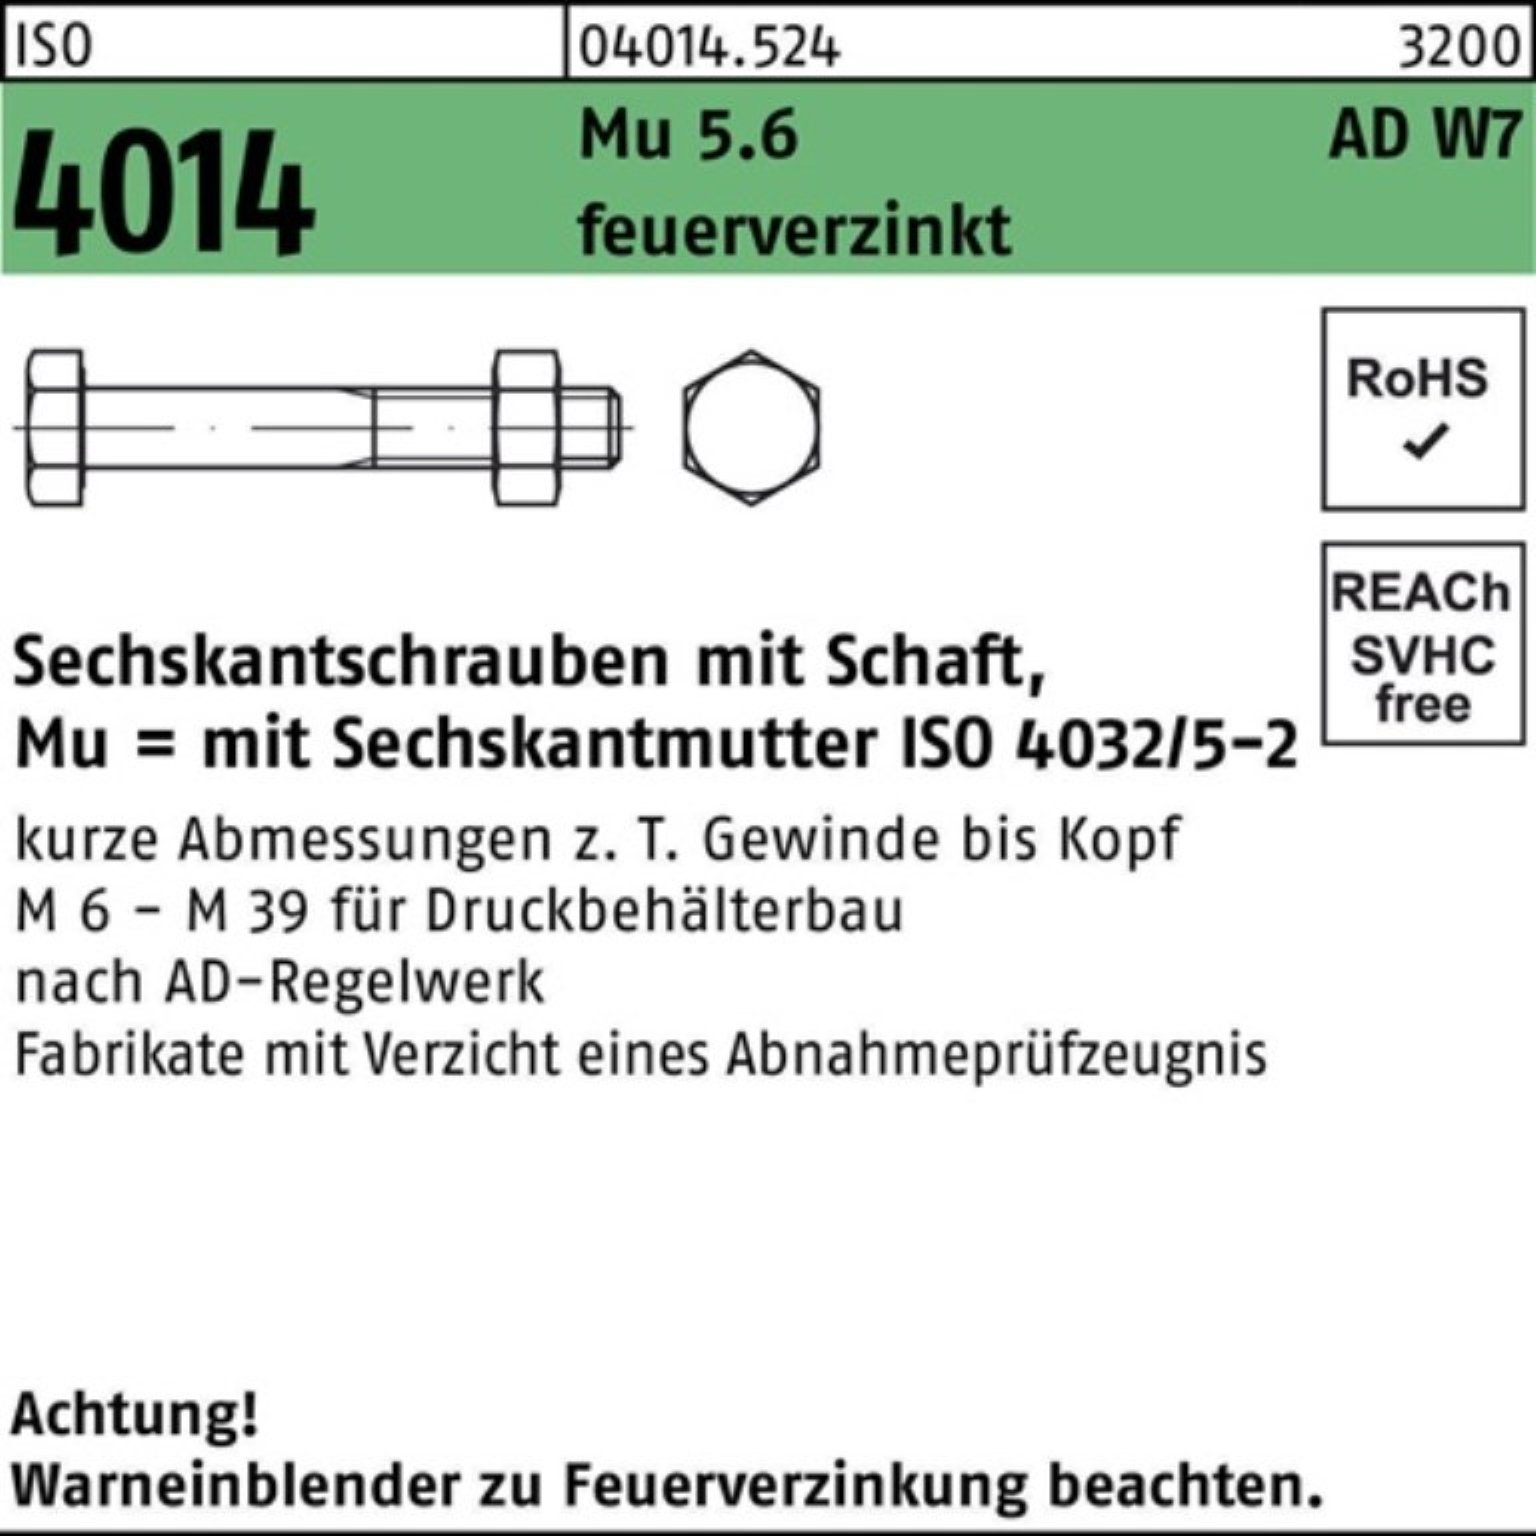 100er 4014 140 W7 M20x Bufab Schaft Mu 5.6 feuerv Pack ISO Sechskantschraube Sechskantschraube